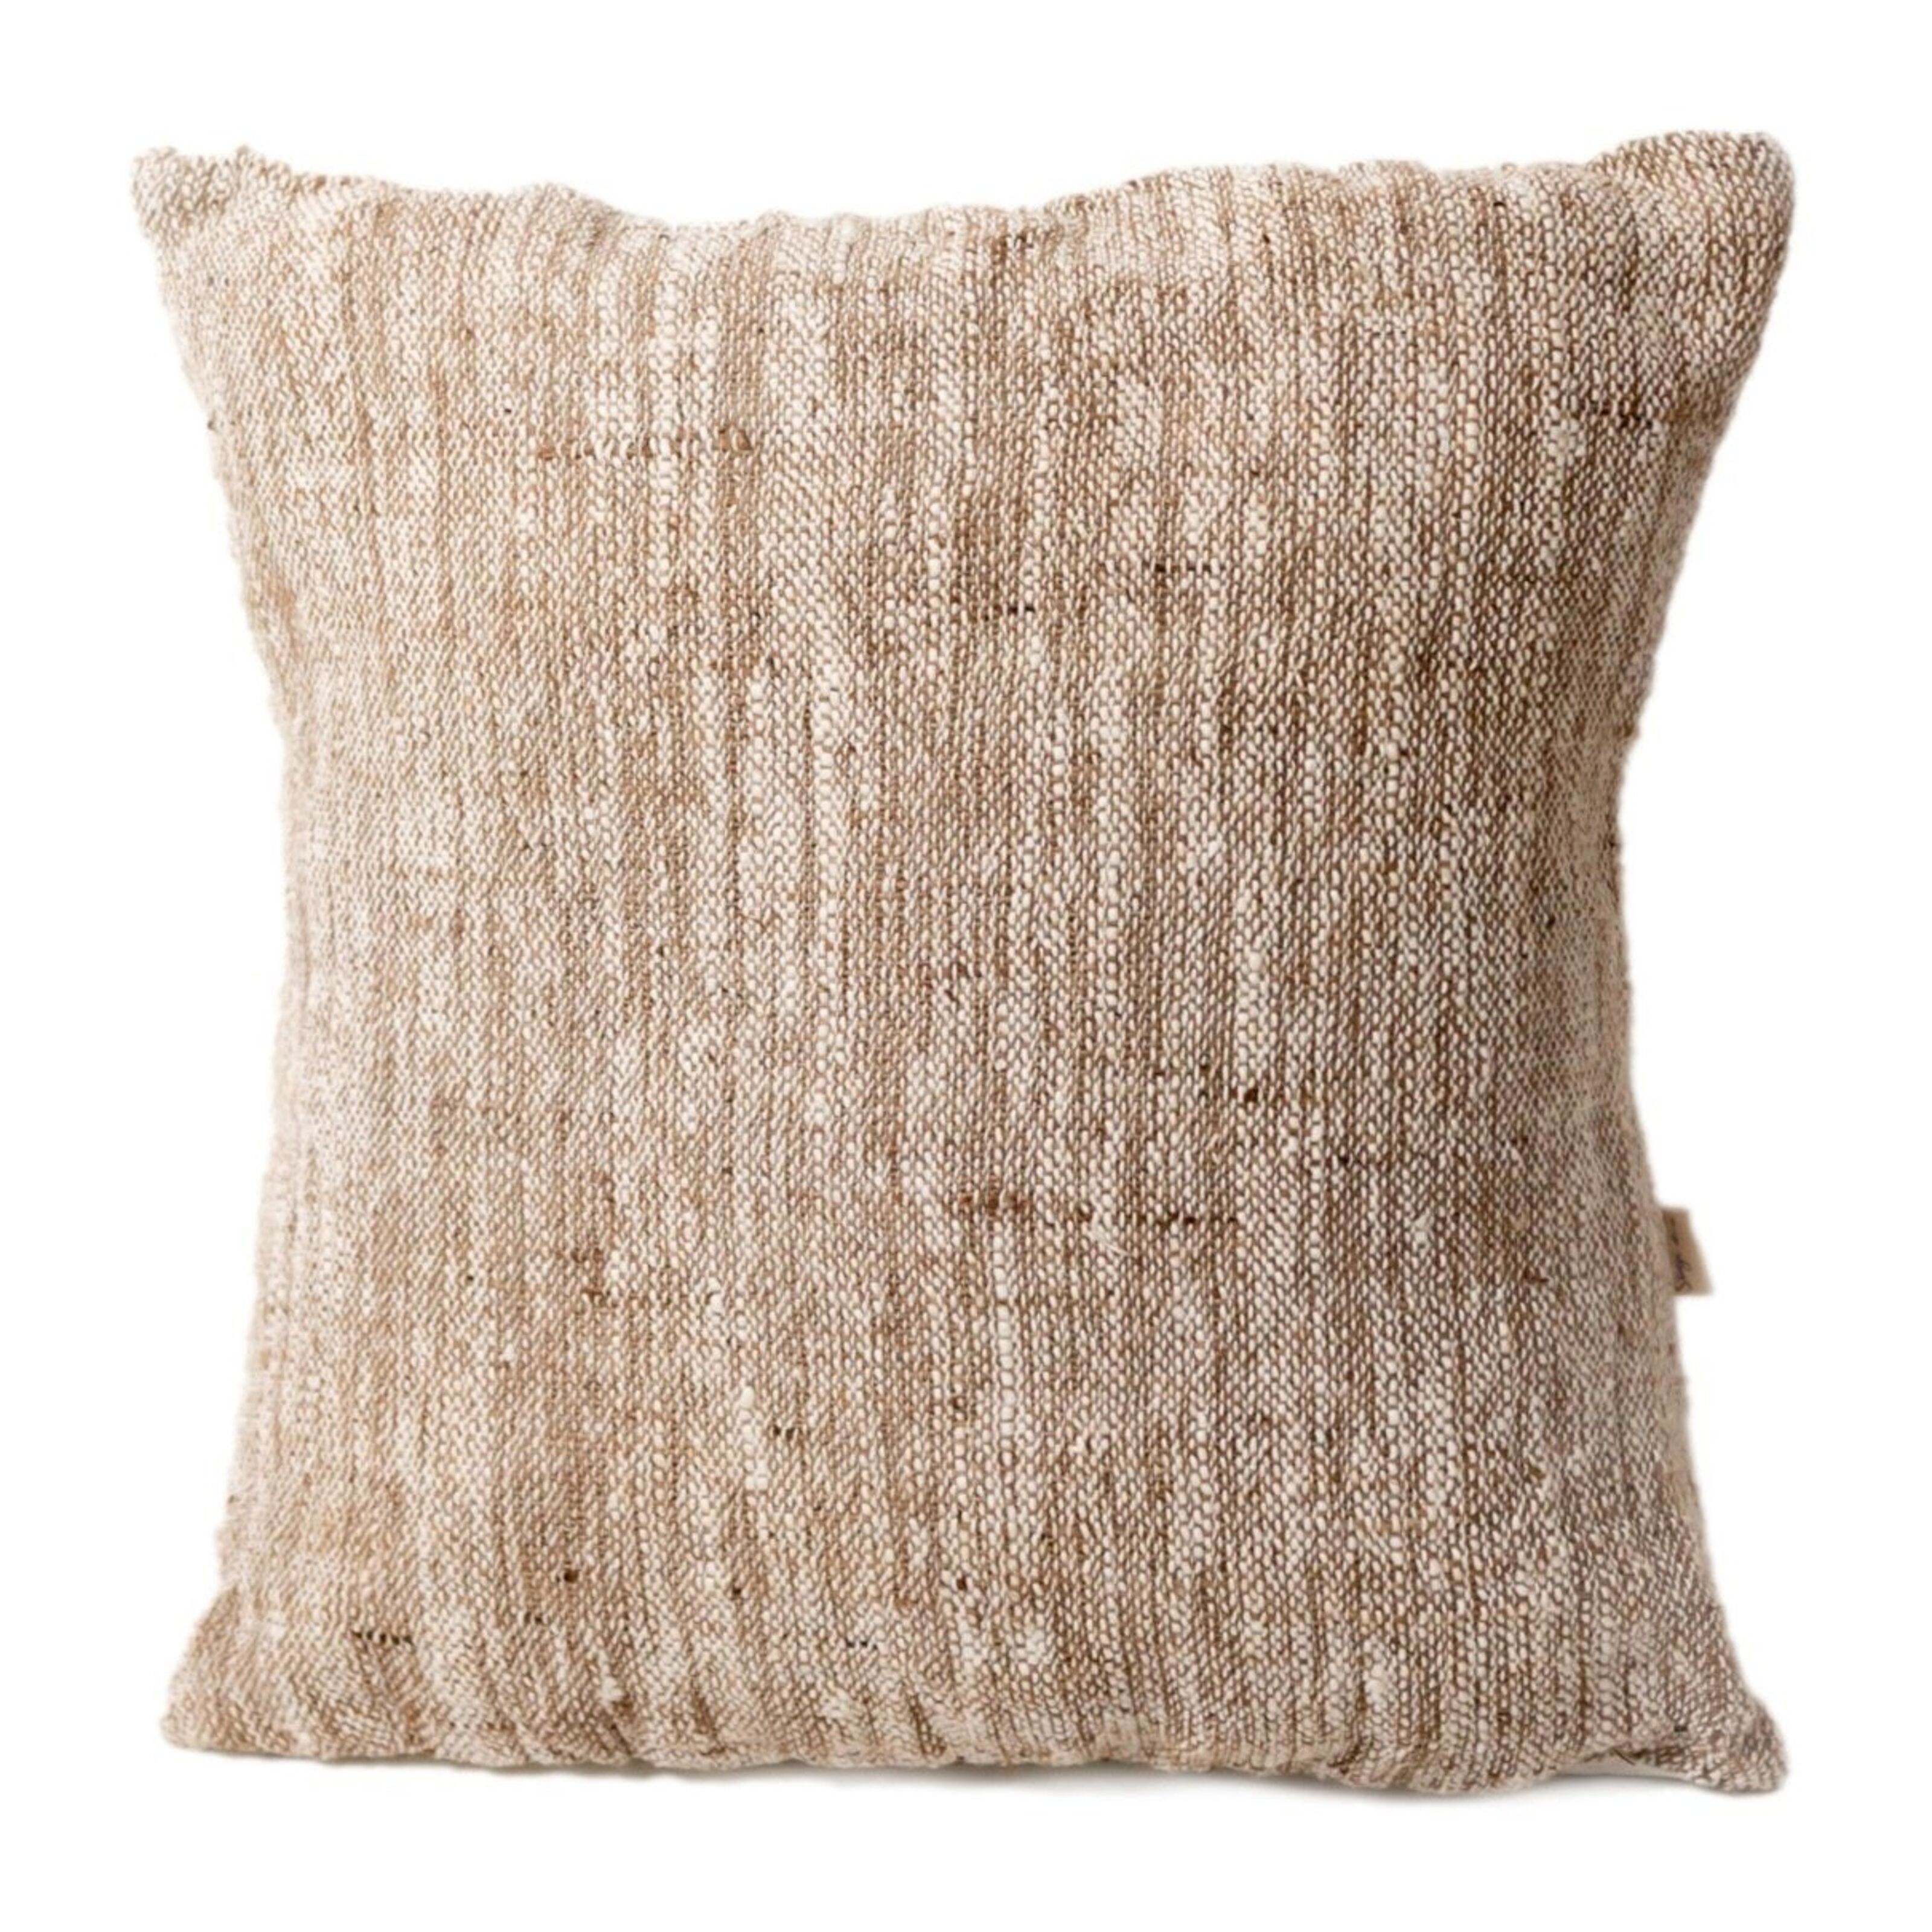 Buy wholesale Handwoven cushion cover 40x40 or 50x50 cm | Throw Pillow |  Cotton sofa cushion LANGIT